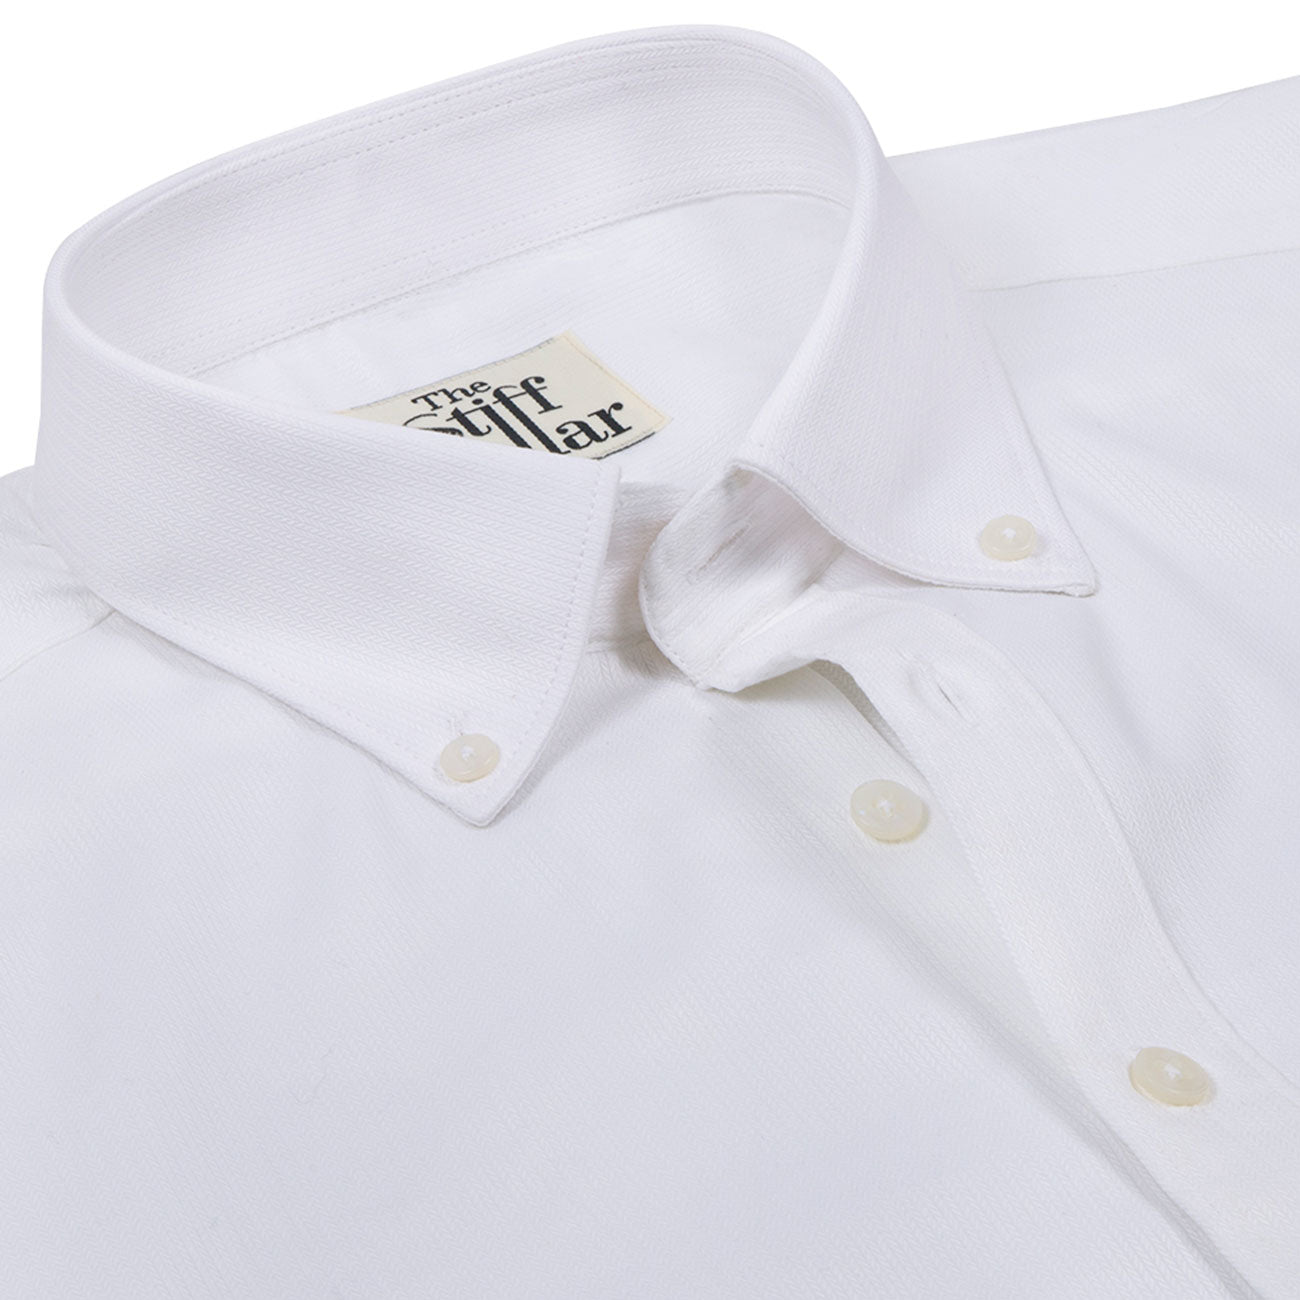 Elvis White Herringbone Button Down 2 Ply Premium Giza Cotton Shirt